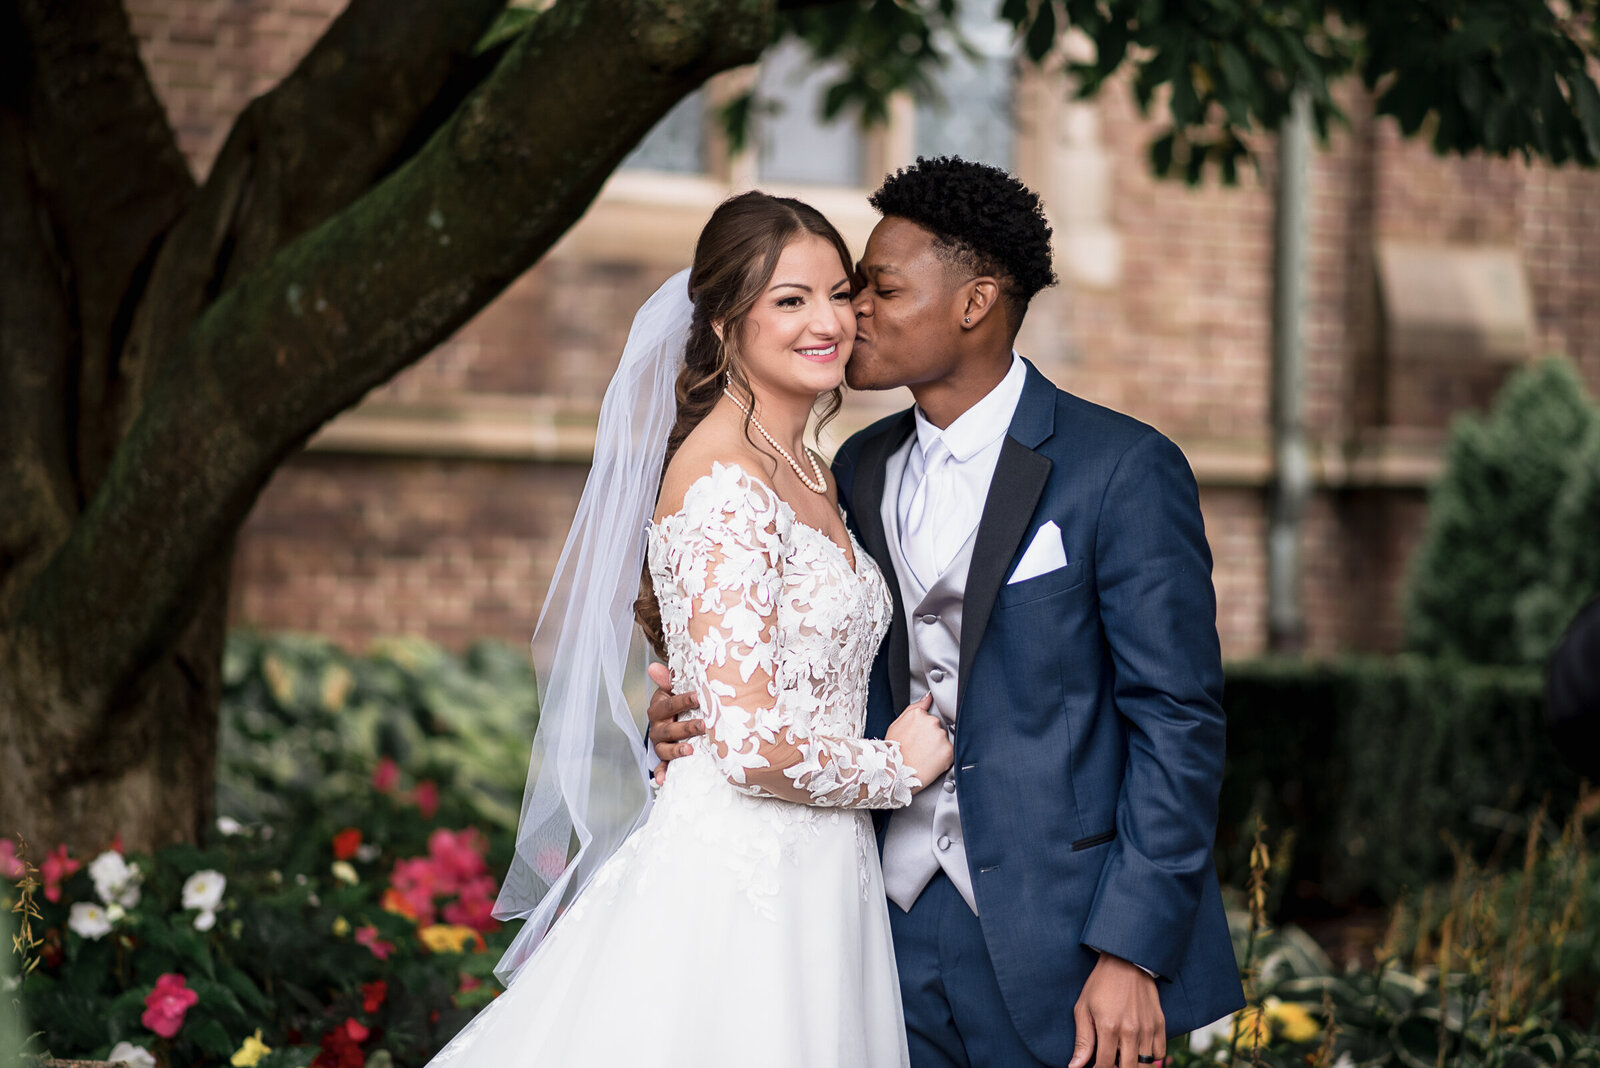 Man kisses wife on cheek during their wedding photos